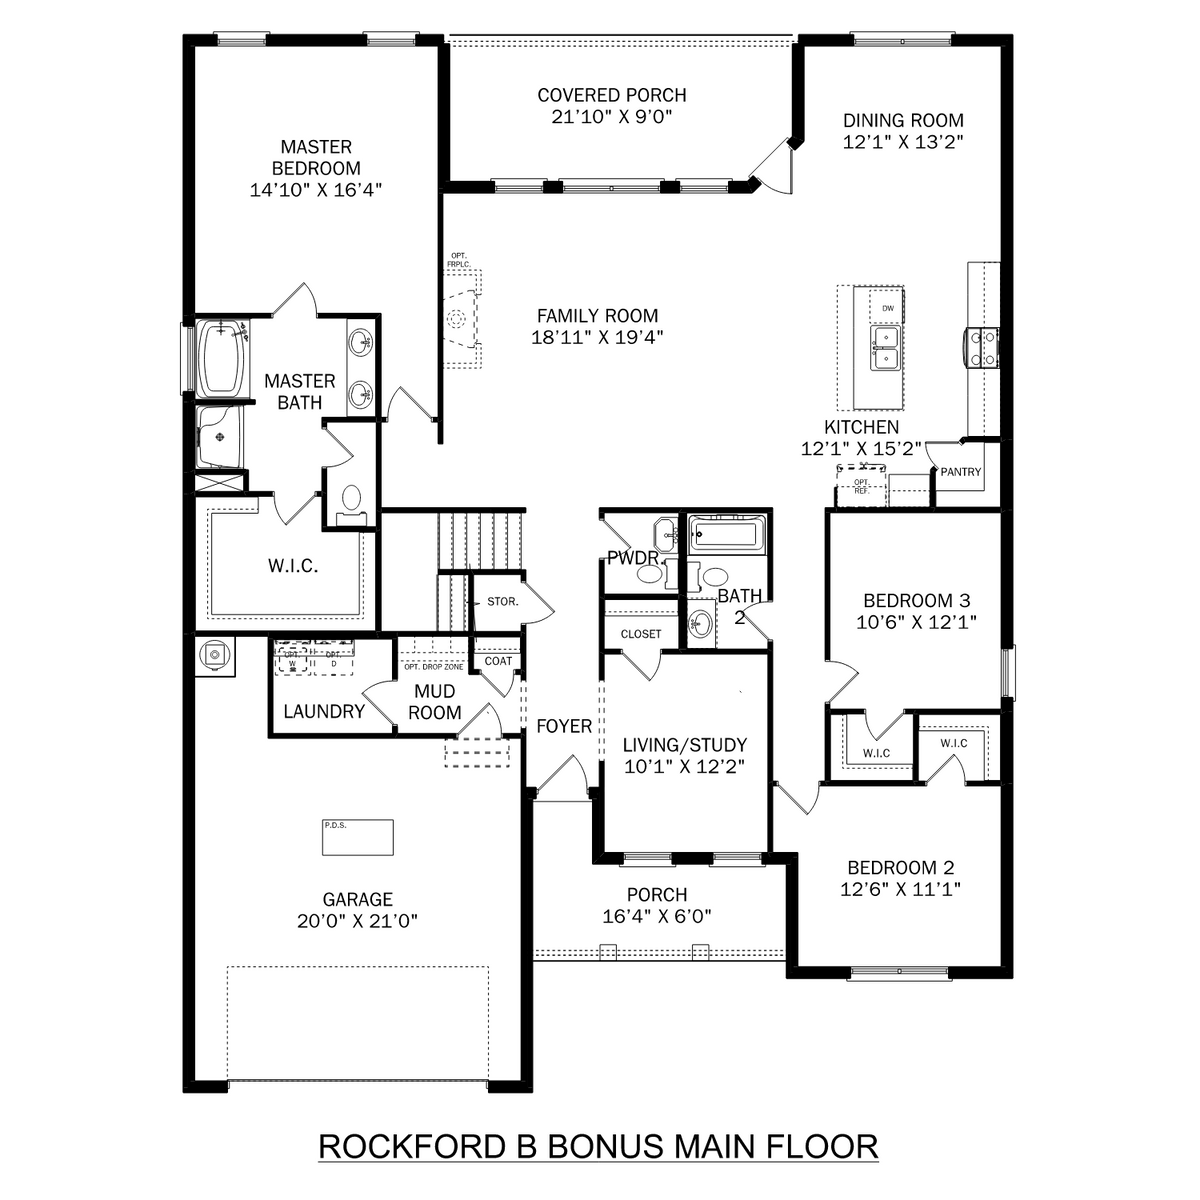 1 - The Rockford B with Bonus floor plan layout for 613 Magnolia Cove Lane SW in Davidson Homes' Magnolia Preserve community.